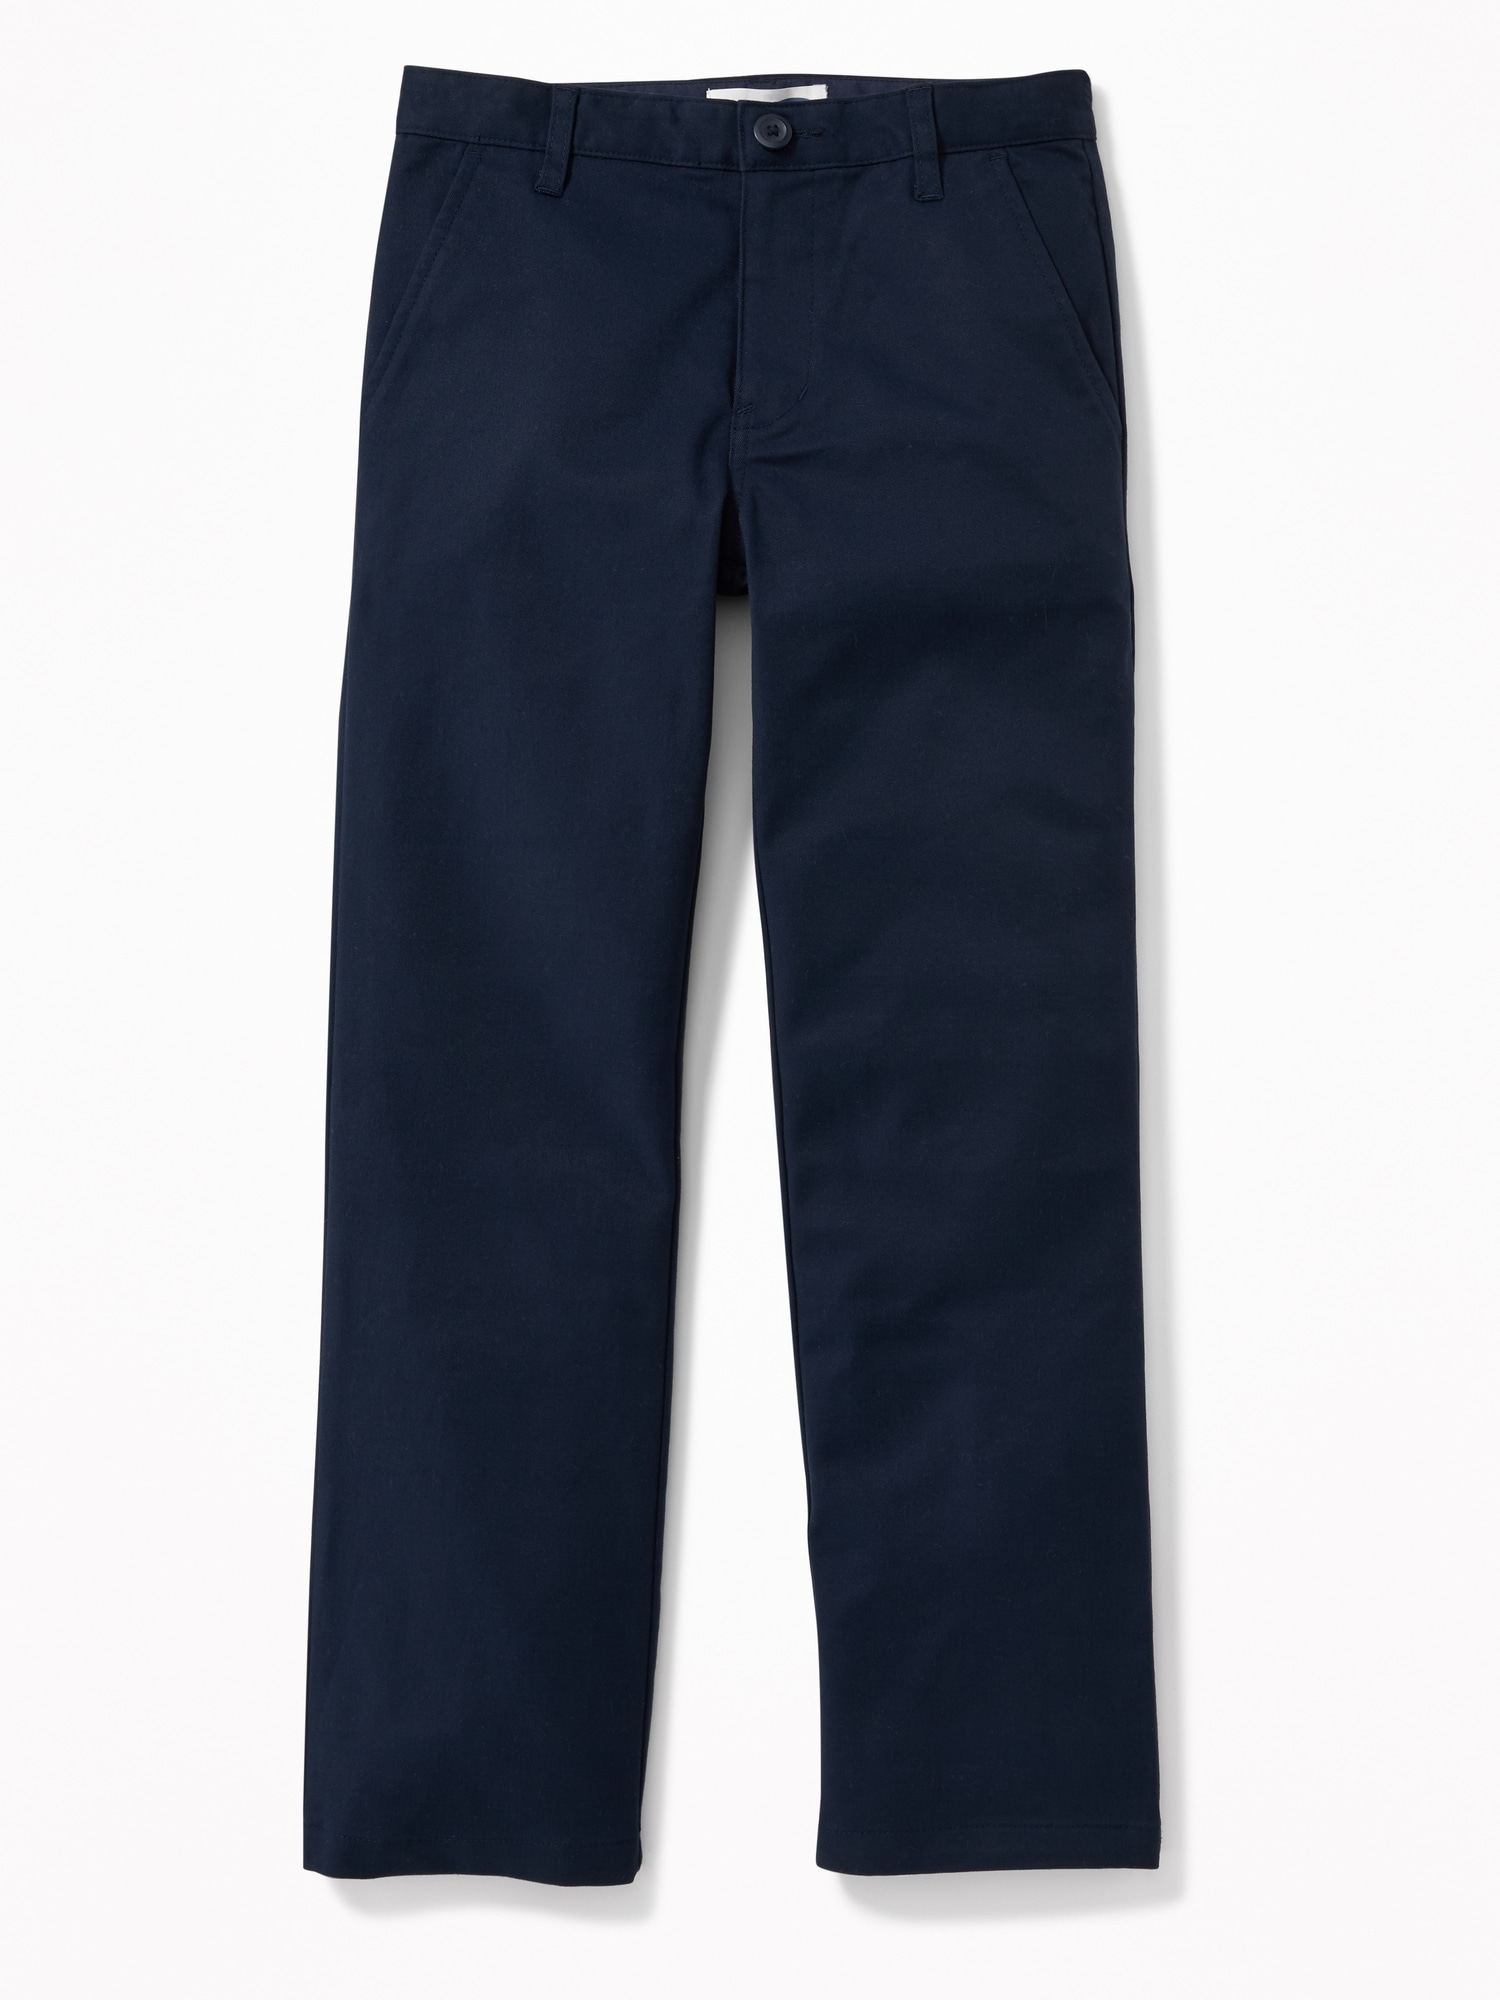 Straight Built-In Flex Uniform Pants For Boys | Old Navy